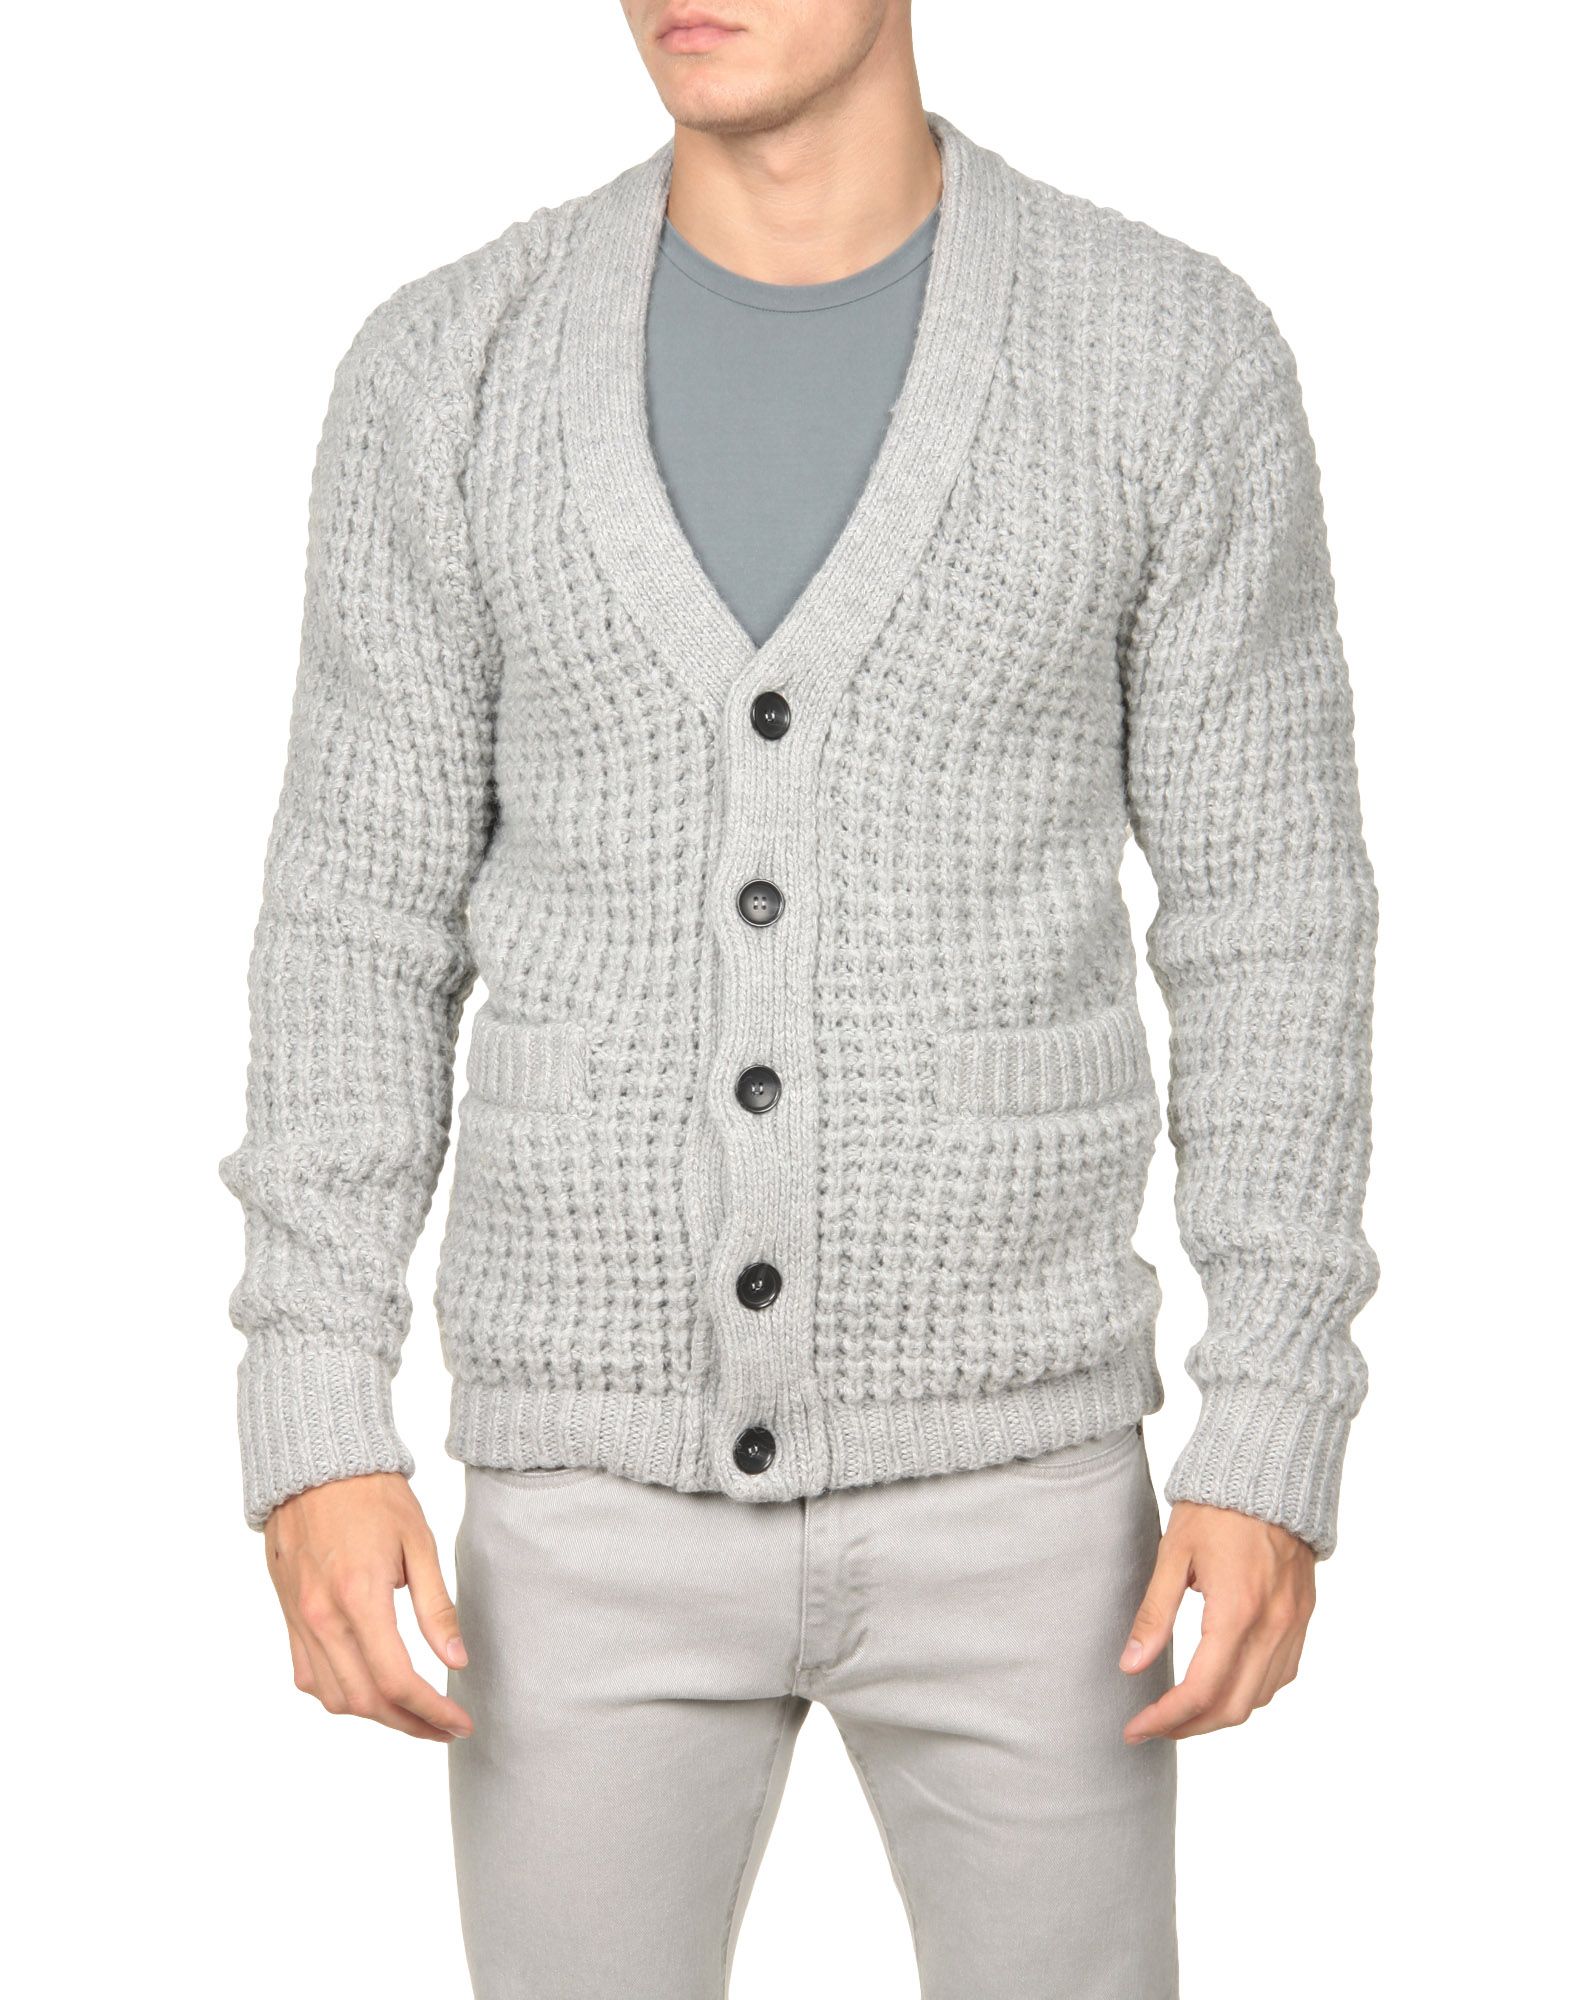 Lyst - Dolce & Gabbana Waffle Knit Cardigan in Gray for Men